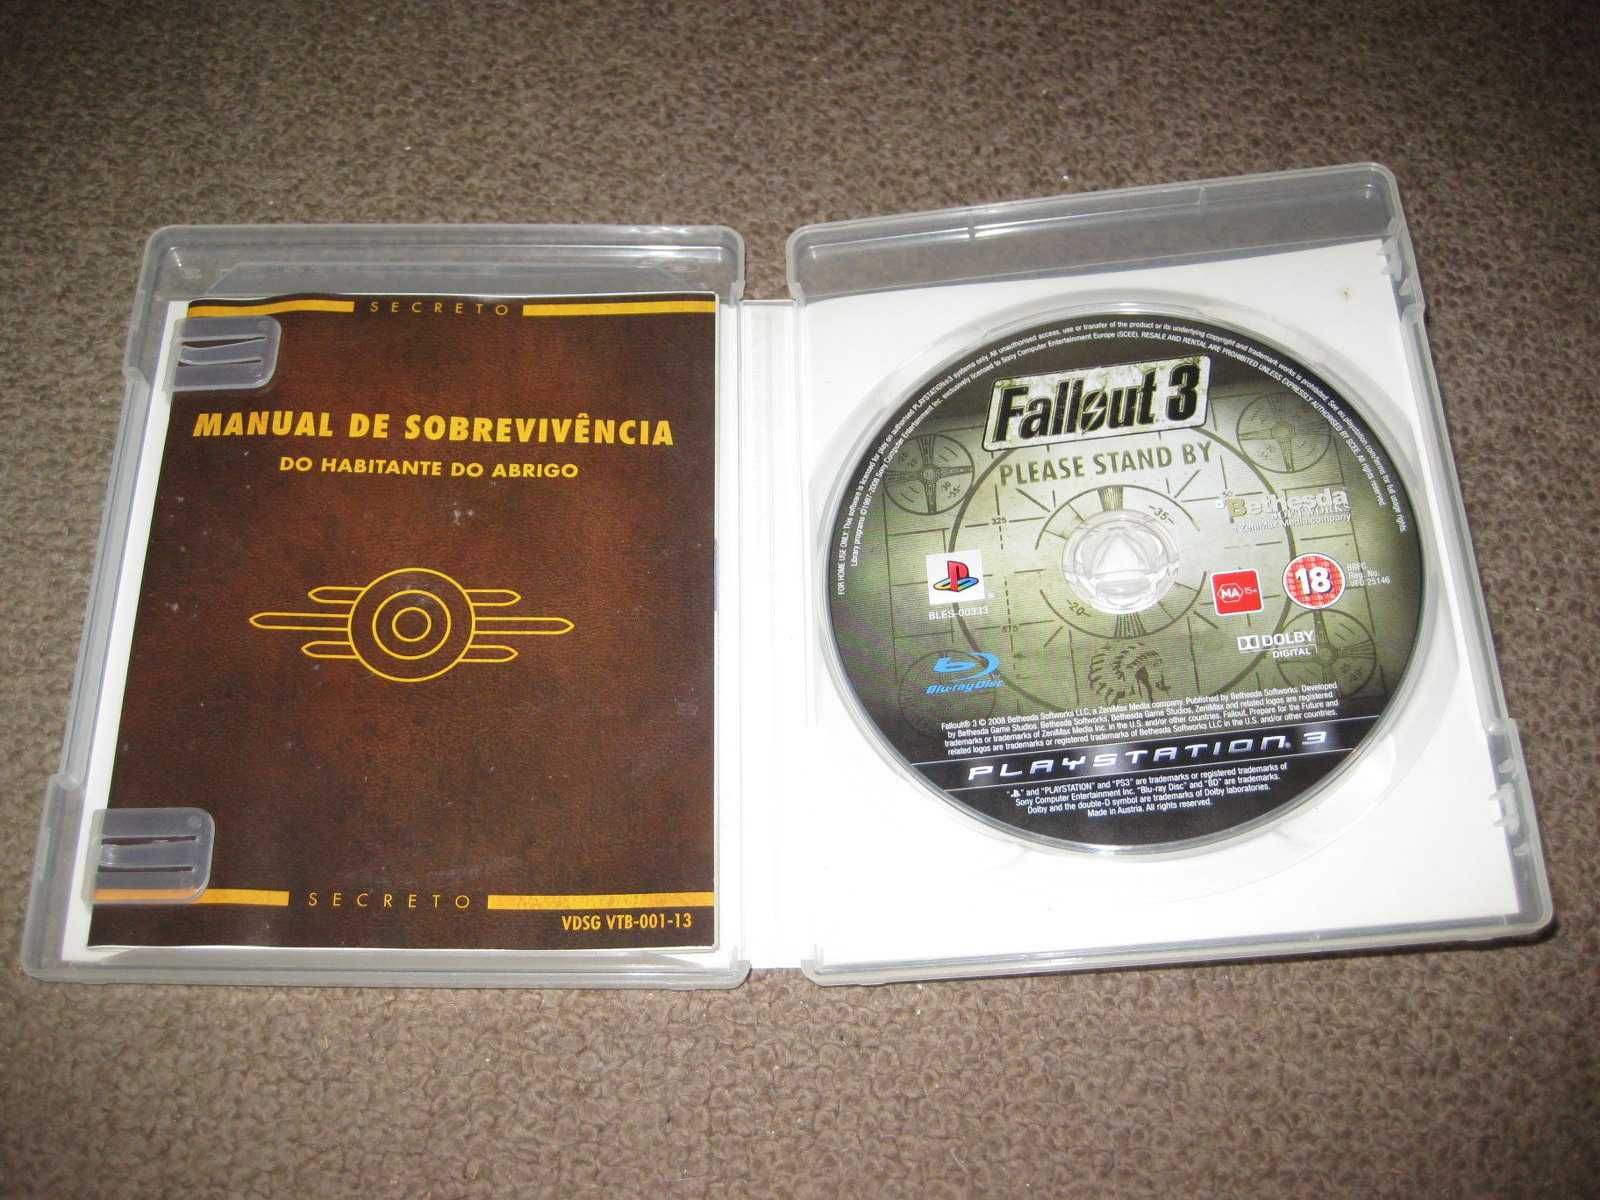 Jogo “Fallout 3" para PS3/Completo!